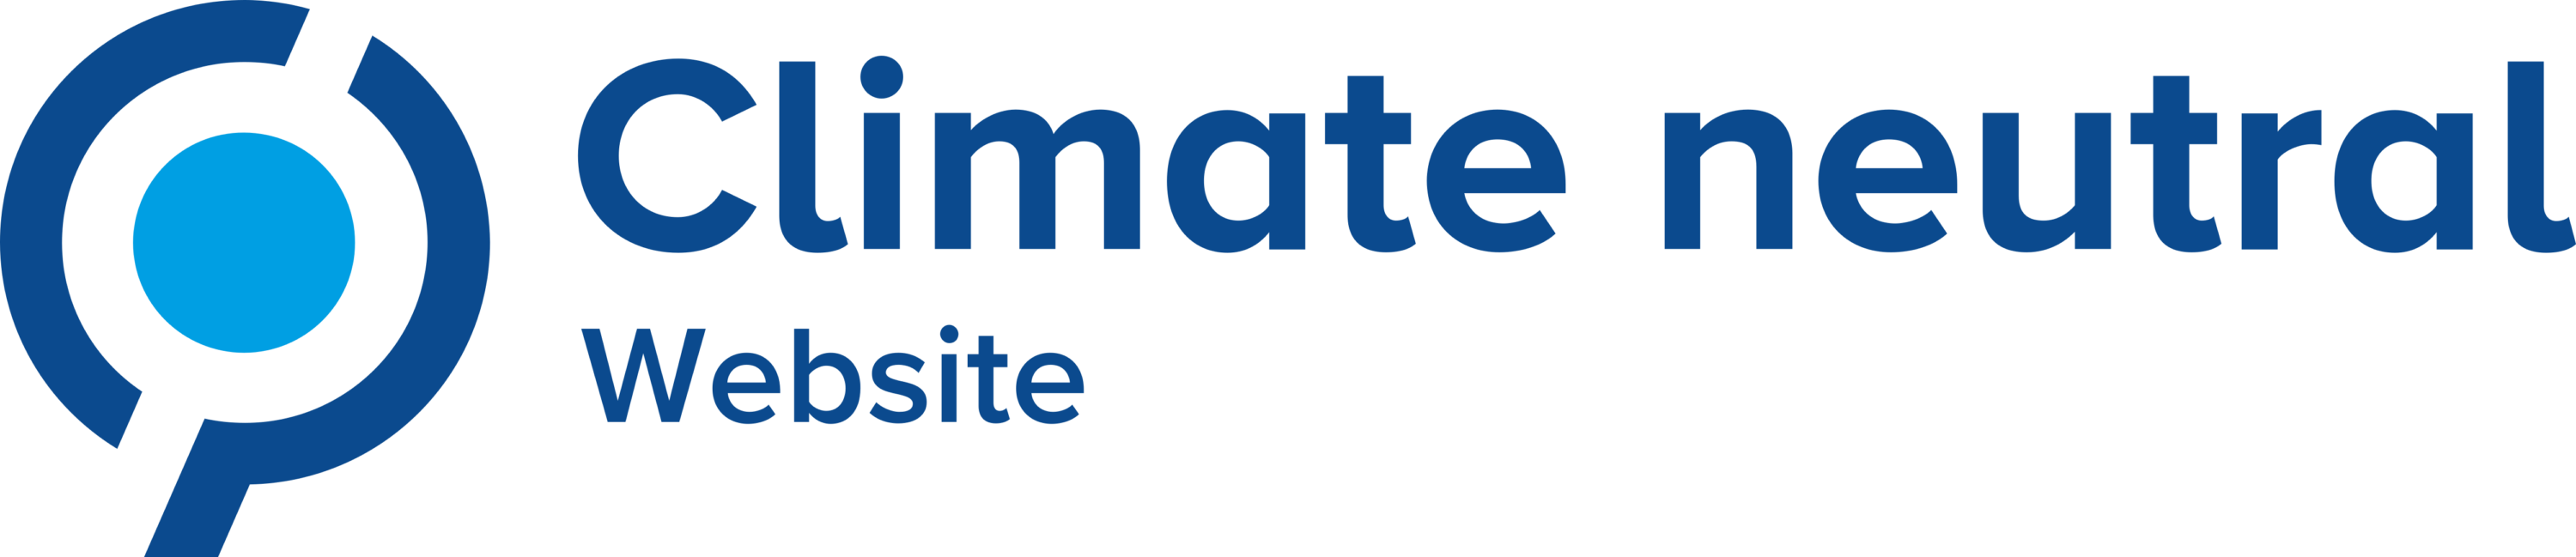 Climate Neutral Website Logo